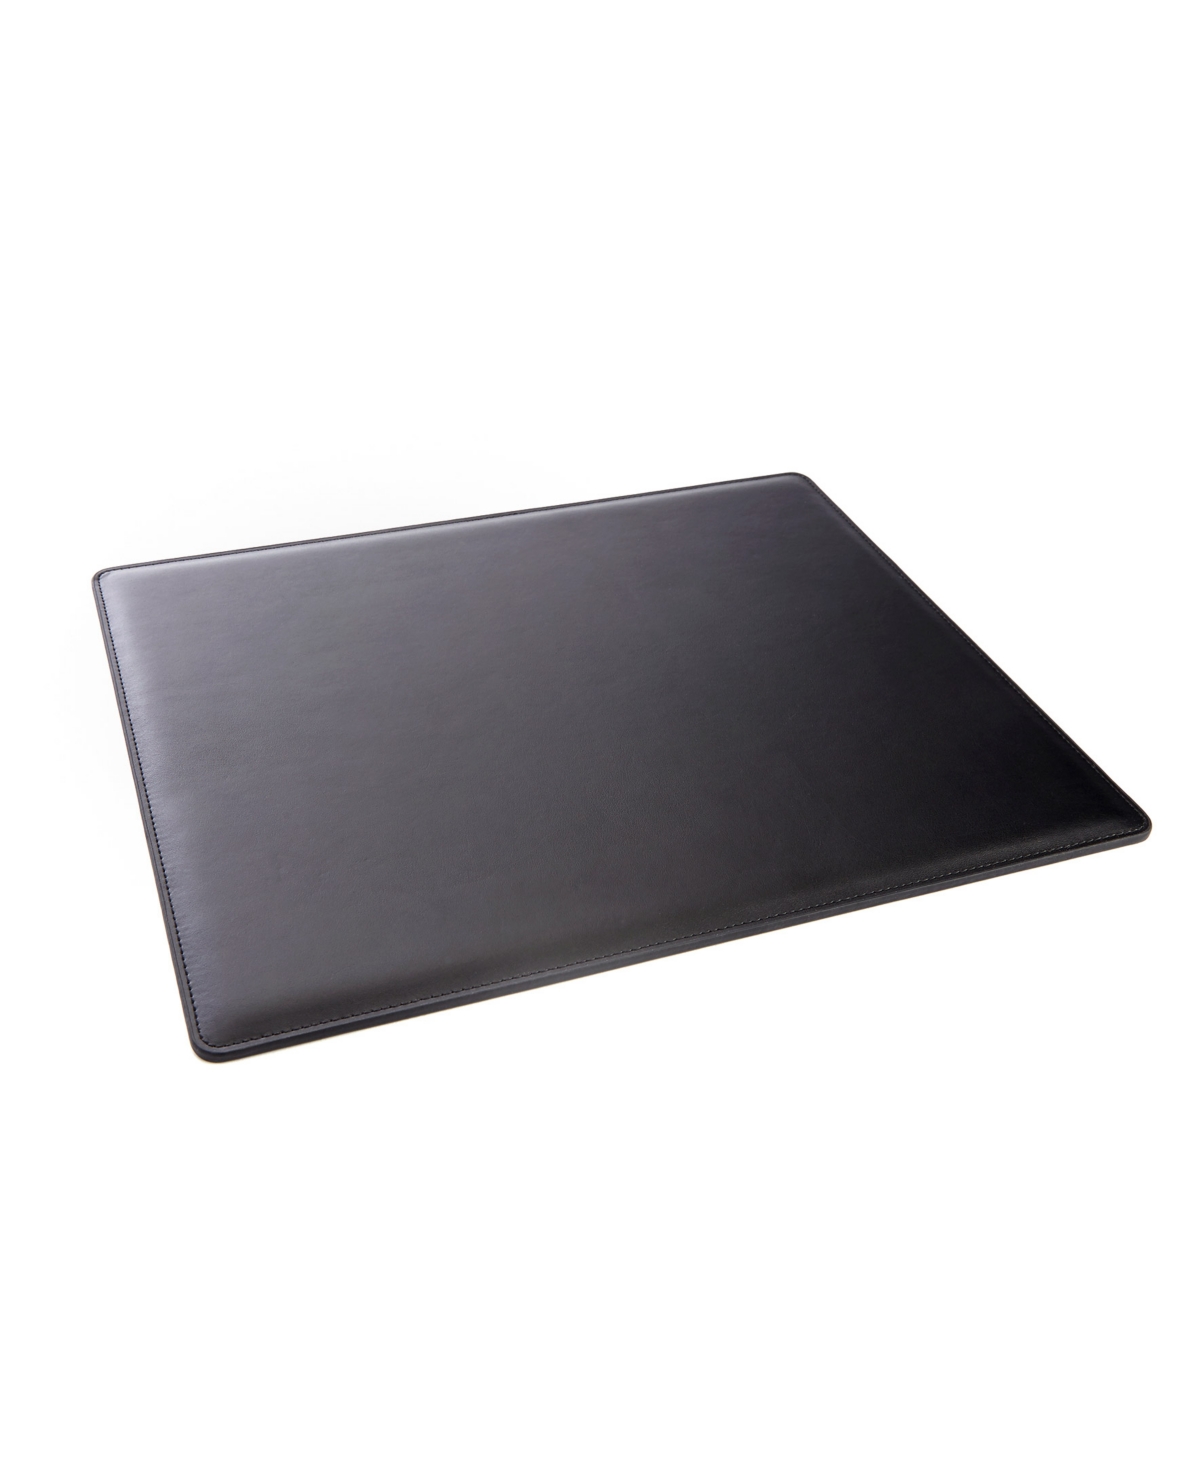 17" x 14" Desk Pad Blotter - Black